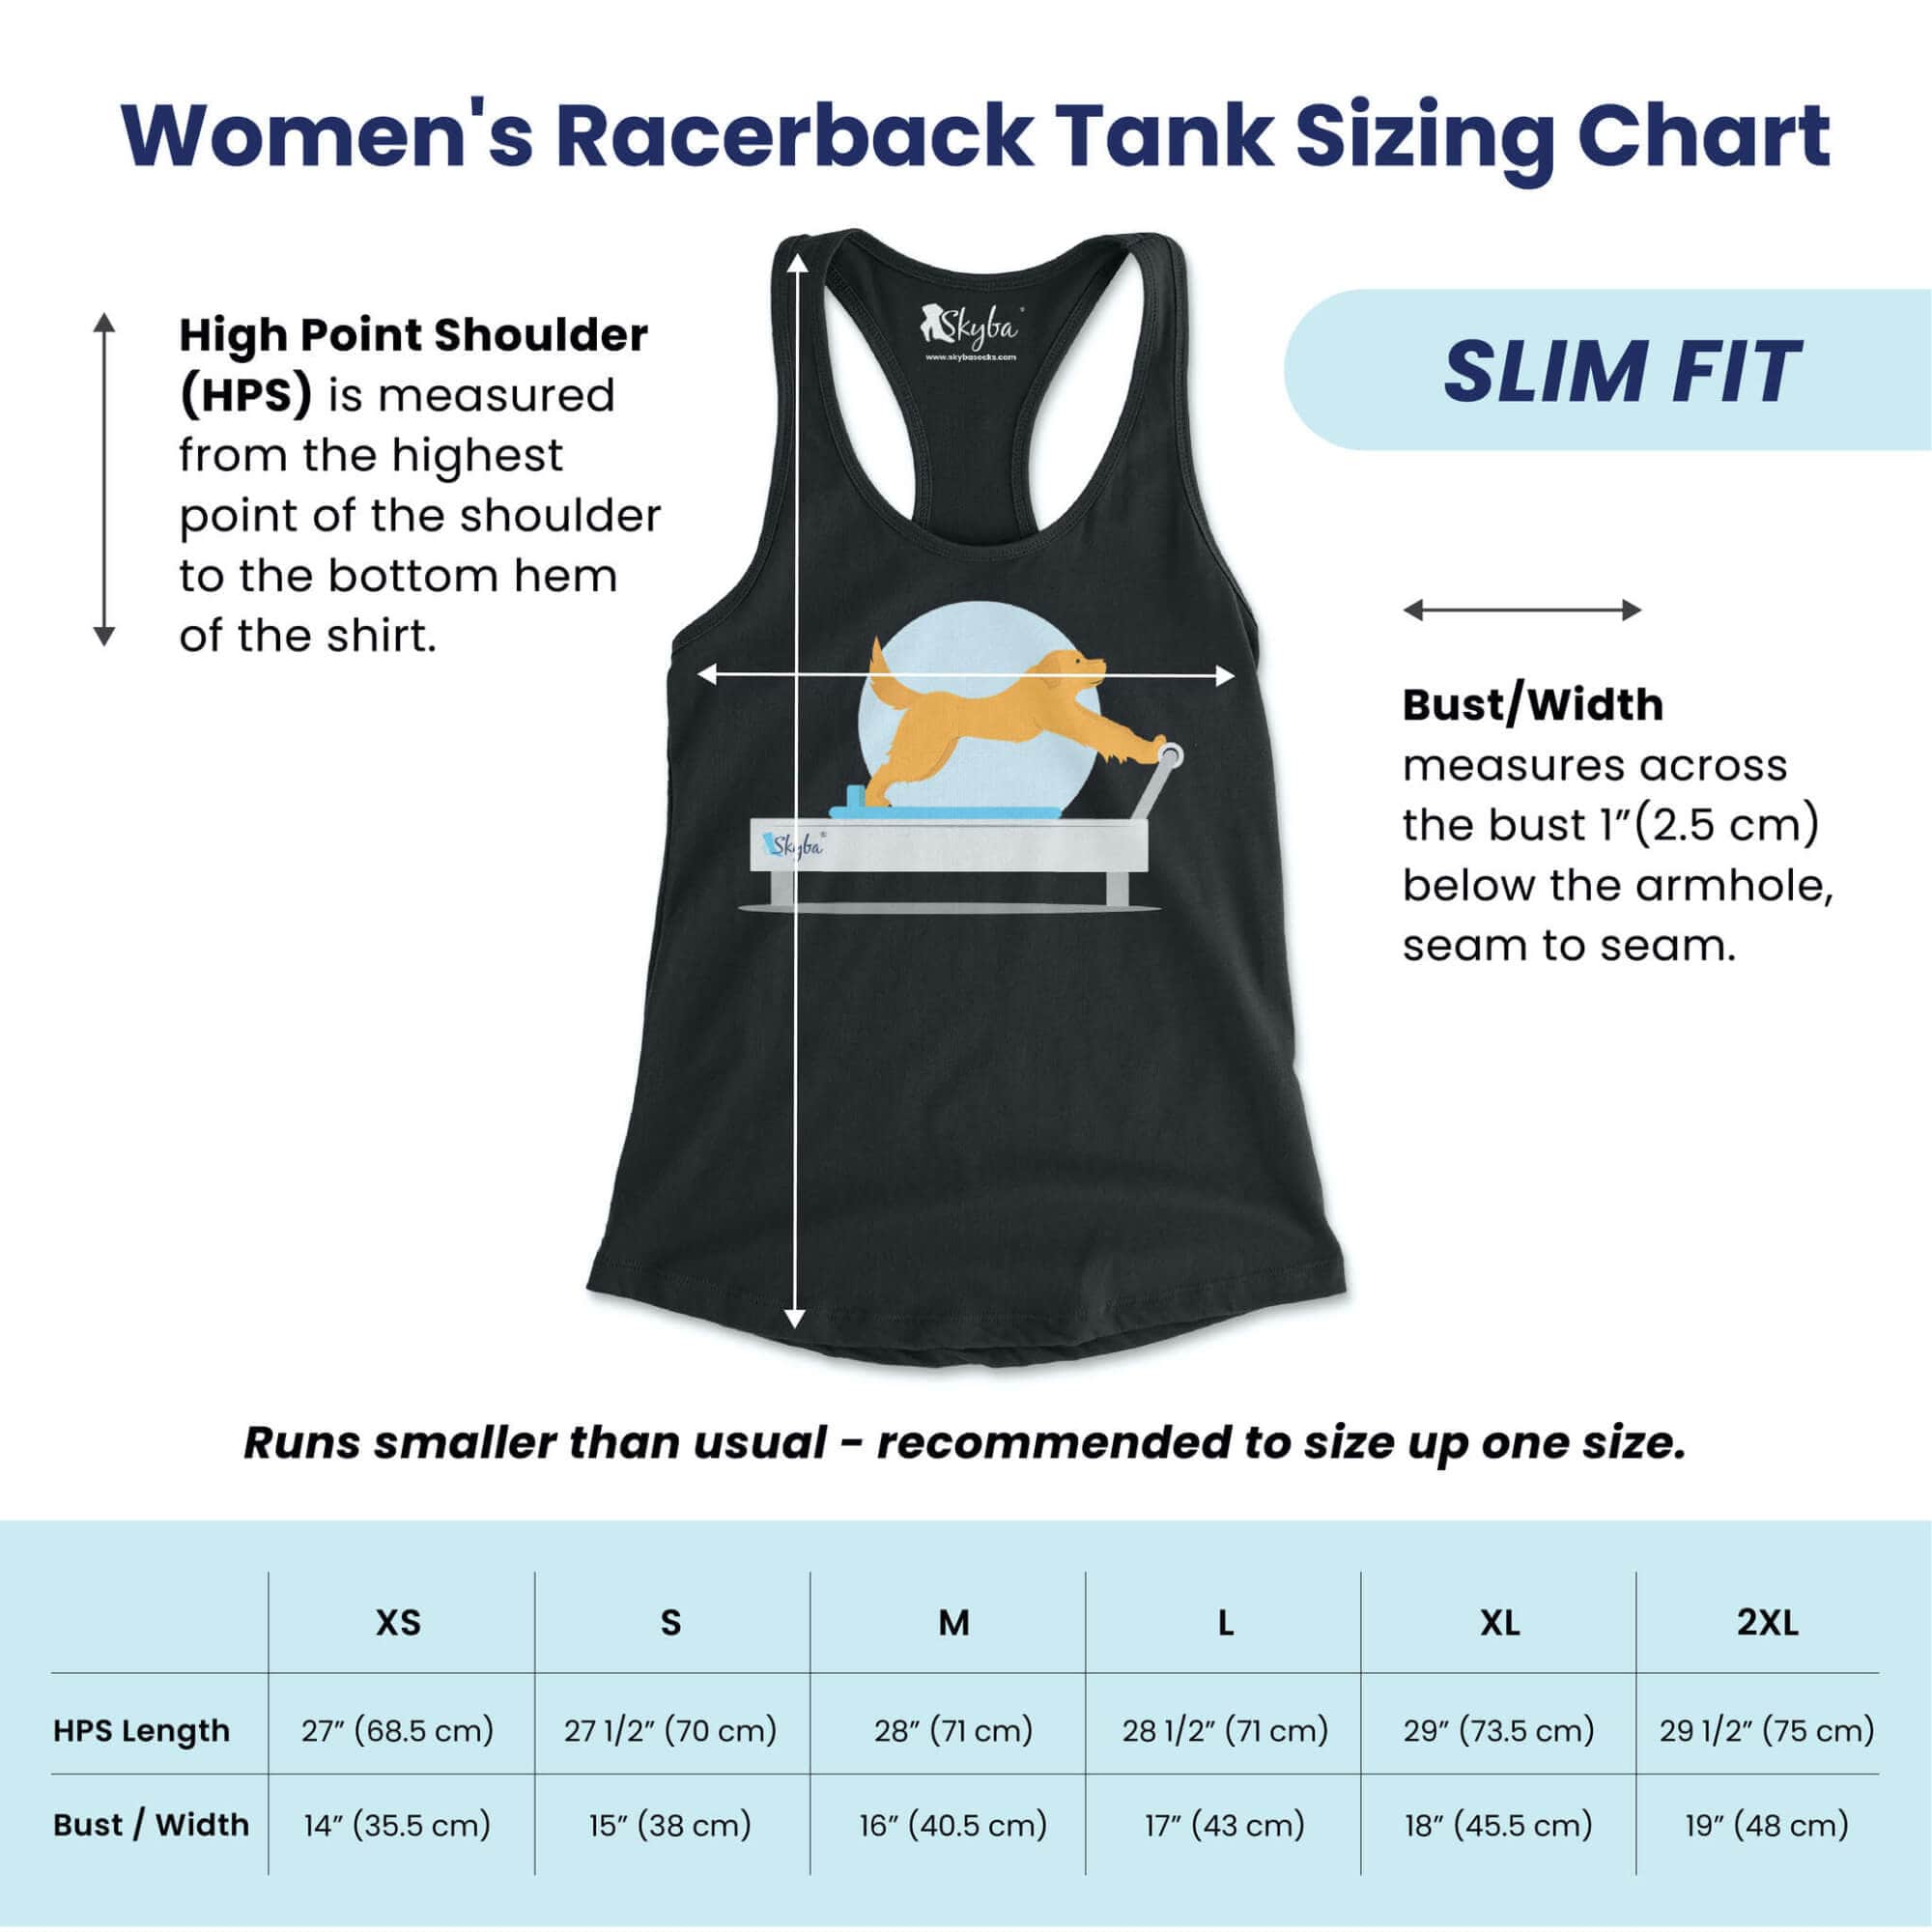 Panda Magic Circle - Women's Slim Fit Tank Skyba Tank Top